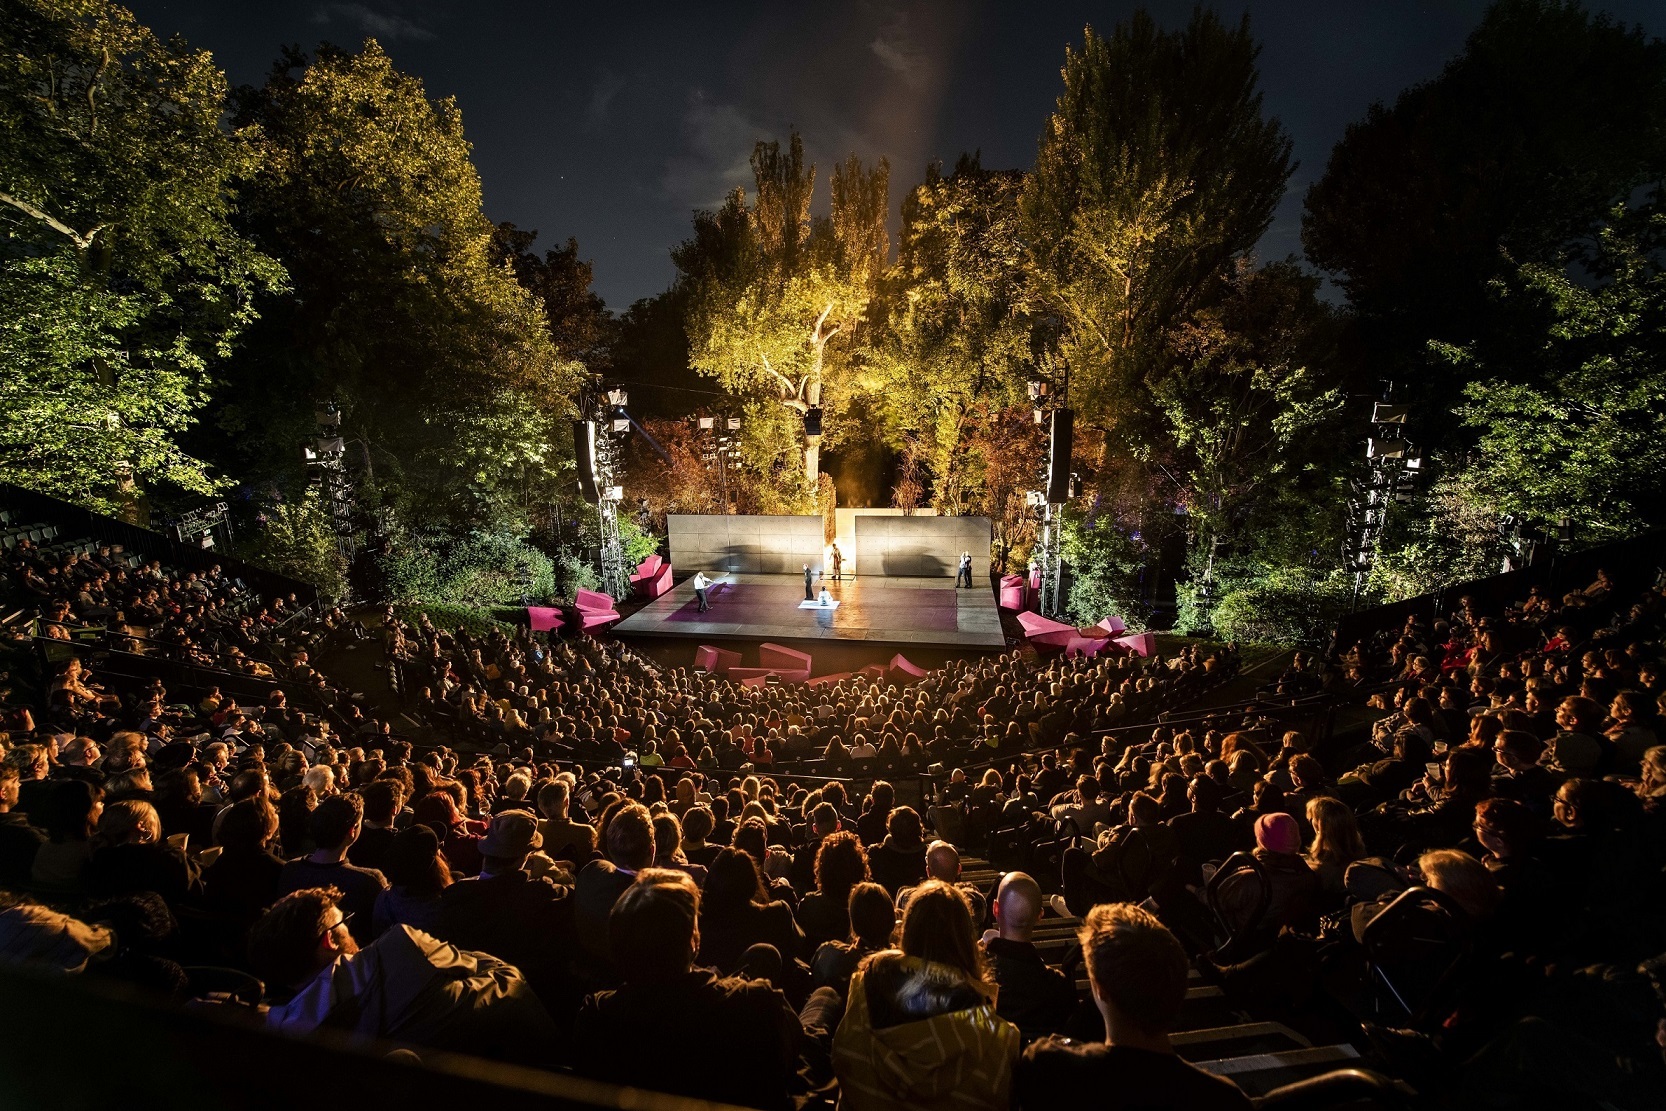 regent’s-park-open-air-theatre-has-announced-its-summer-season